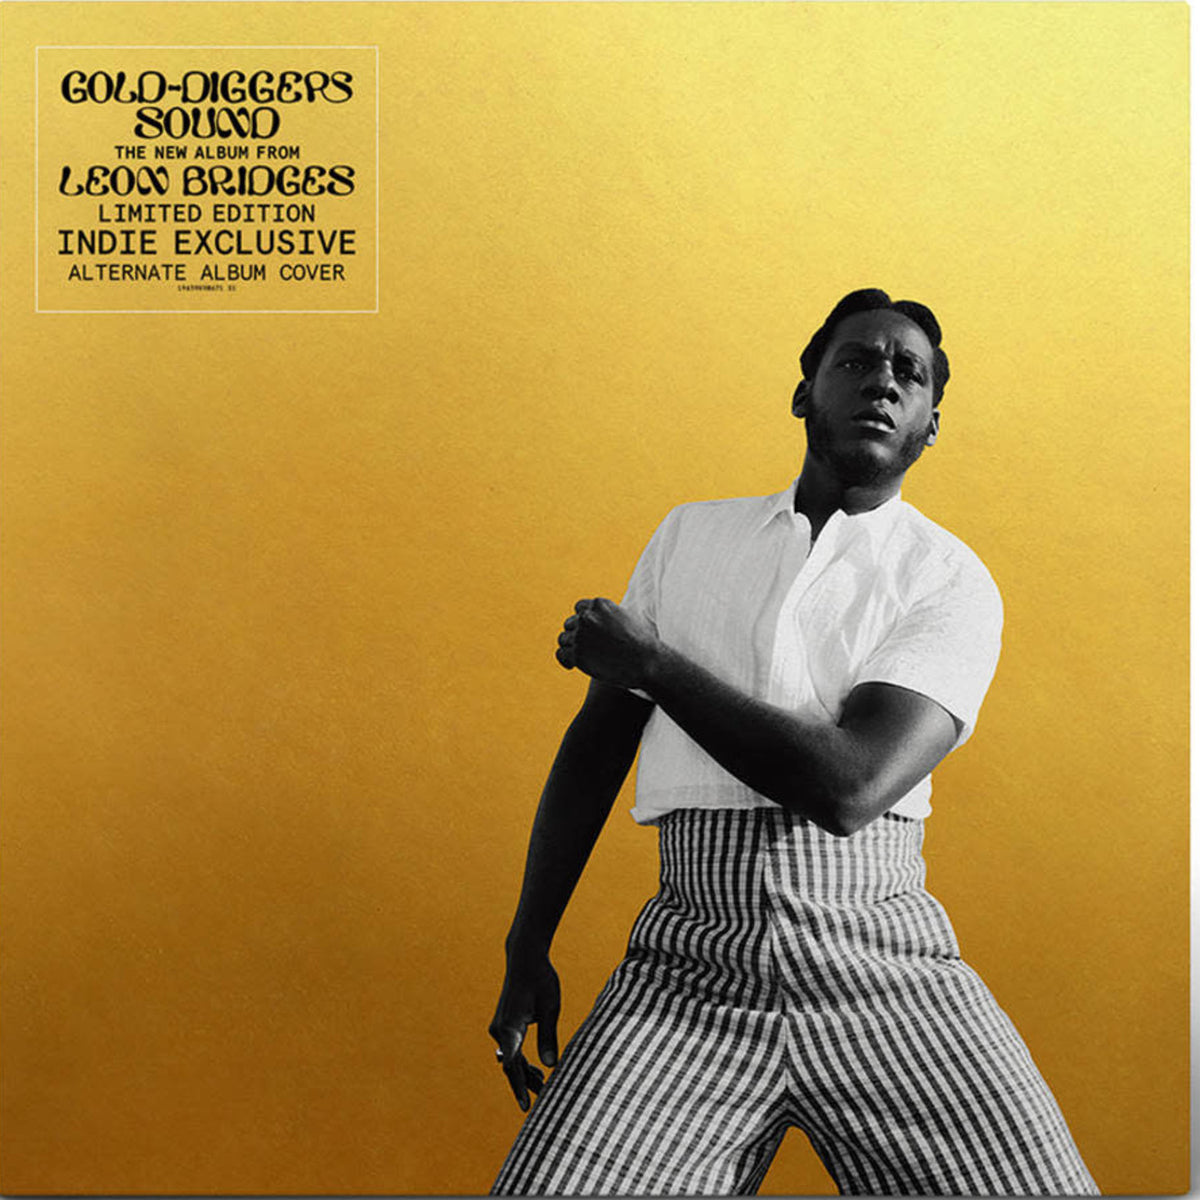 Leon Bridges - Gold-Diggers Sound (LP) - Indie Exclusive Edition